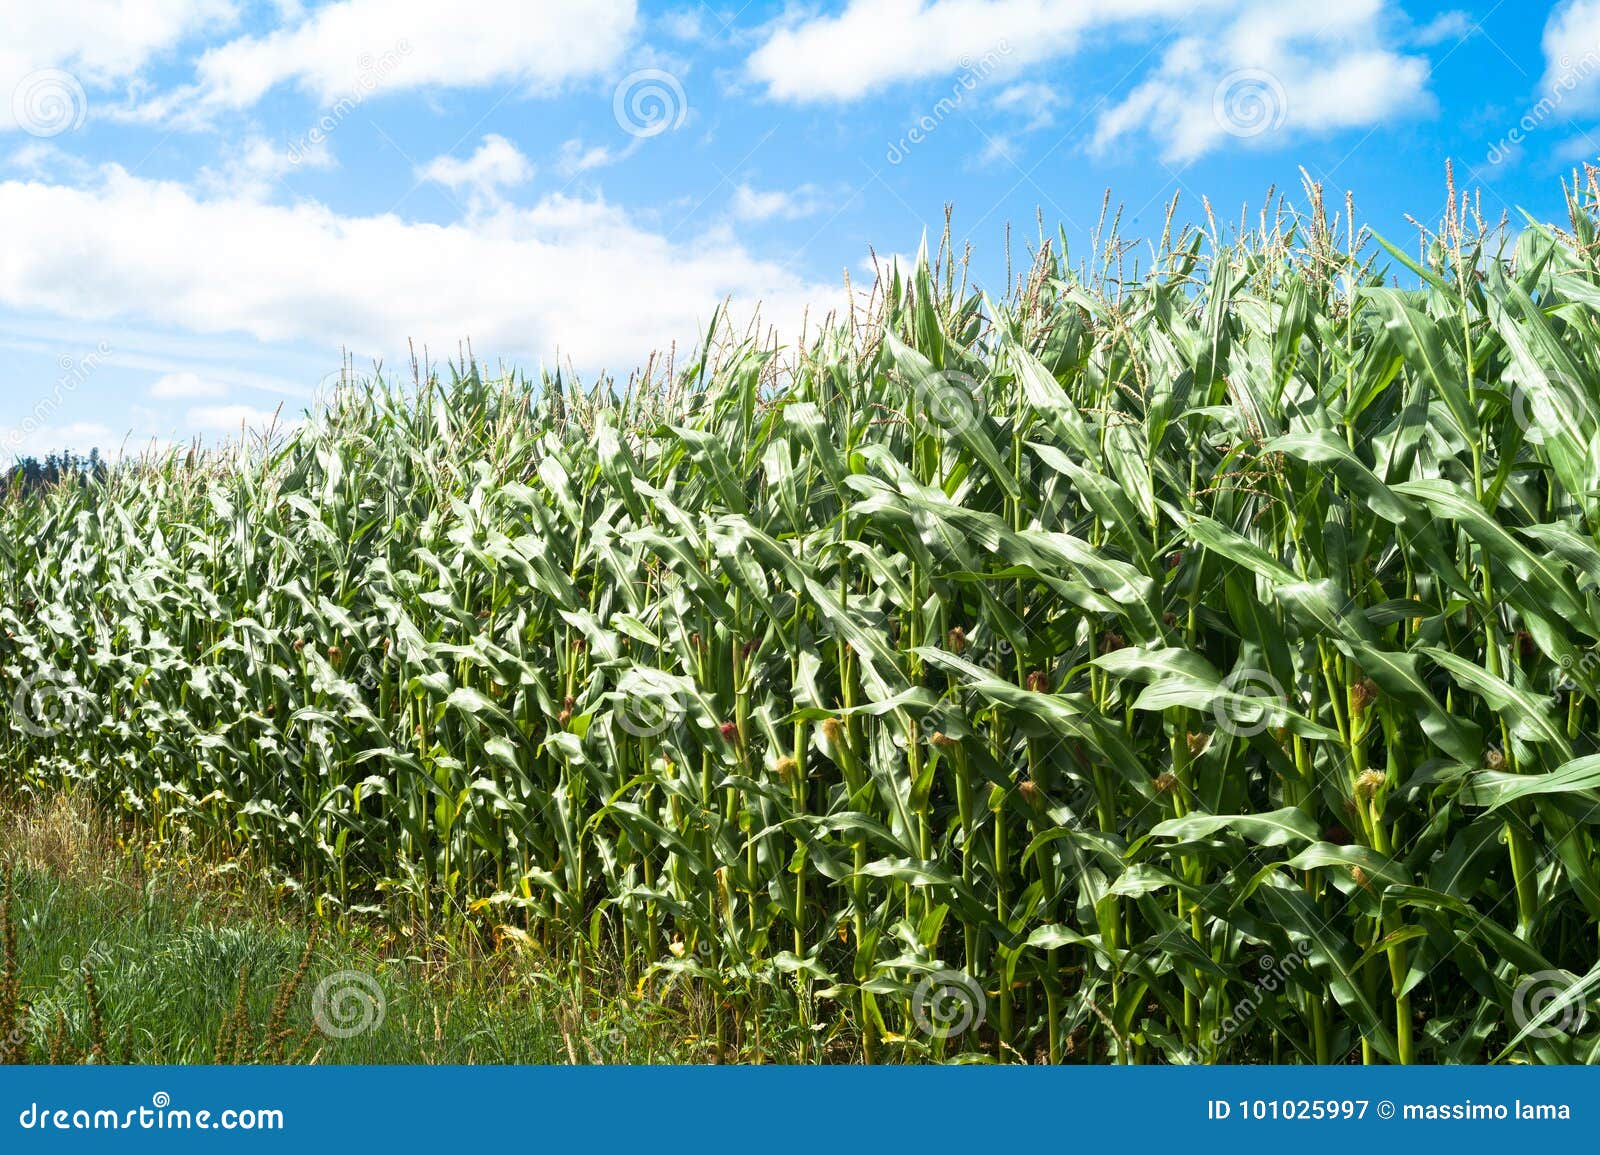 fields of maize